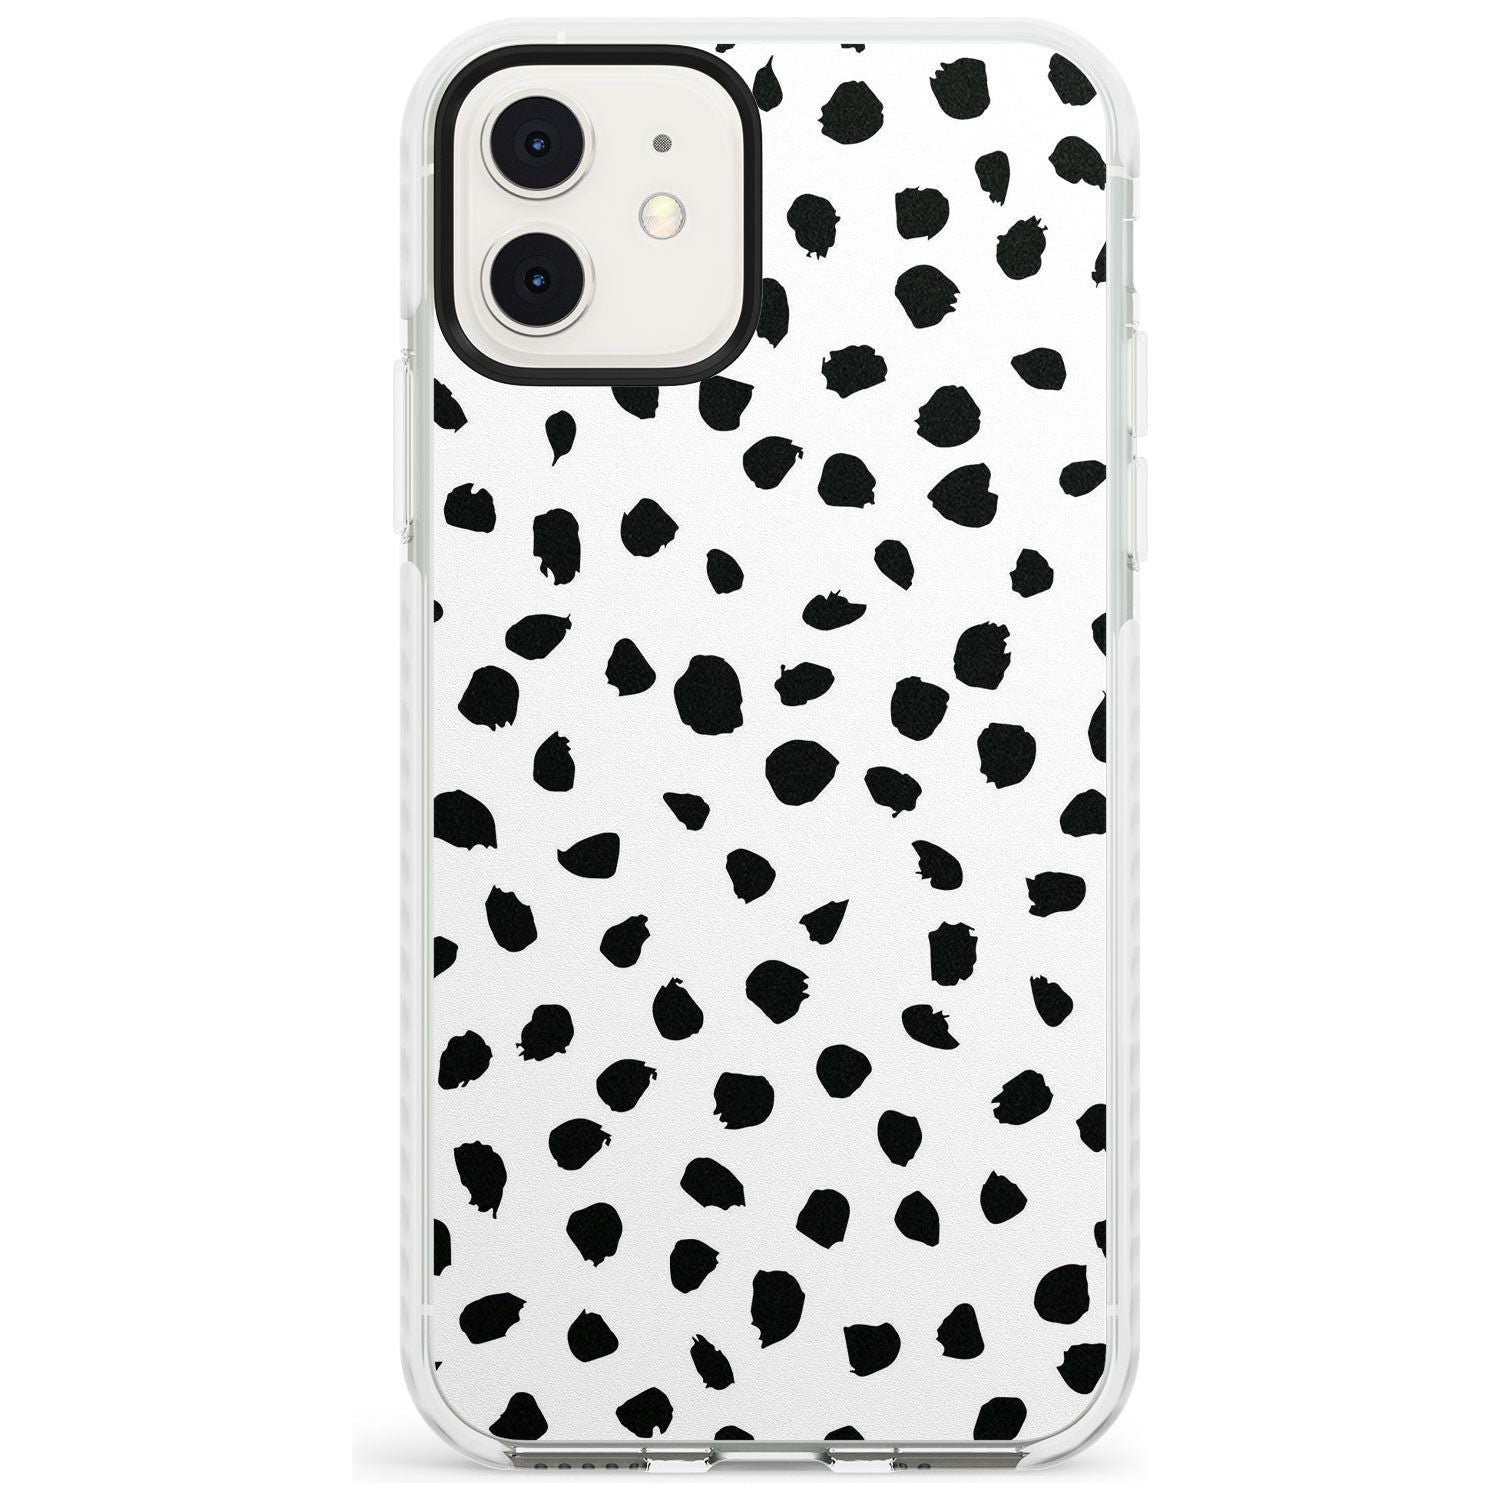 Dalmatian Print Slim TPU Phone Case for iPhone 11